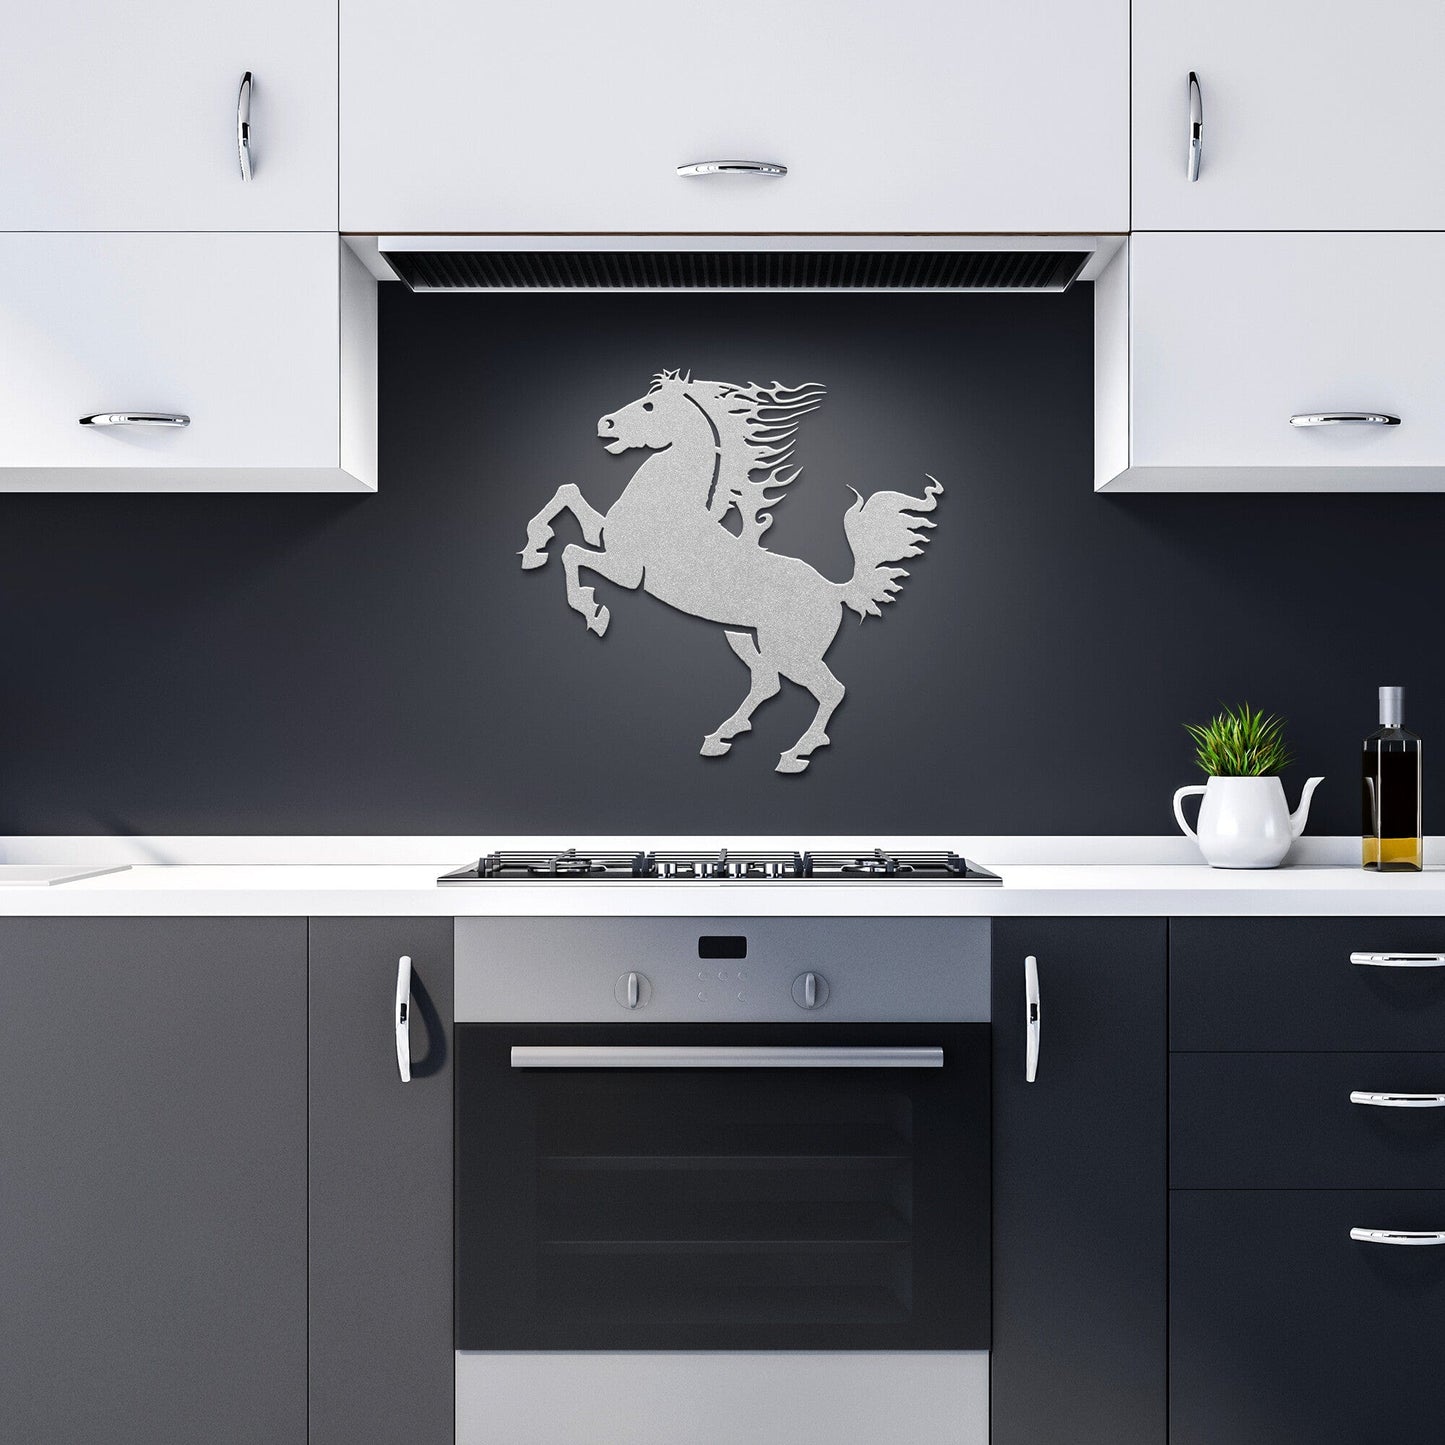 Wild Mustang Decorative Metal Wall Art